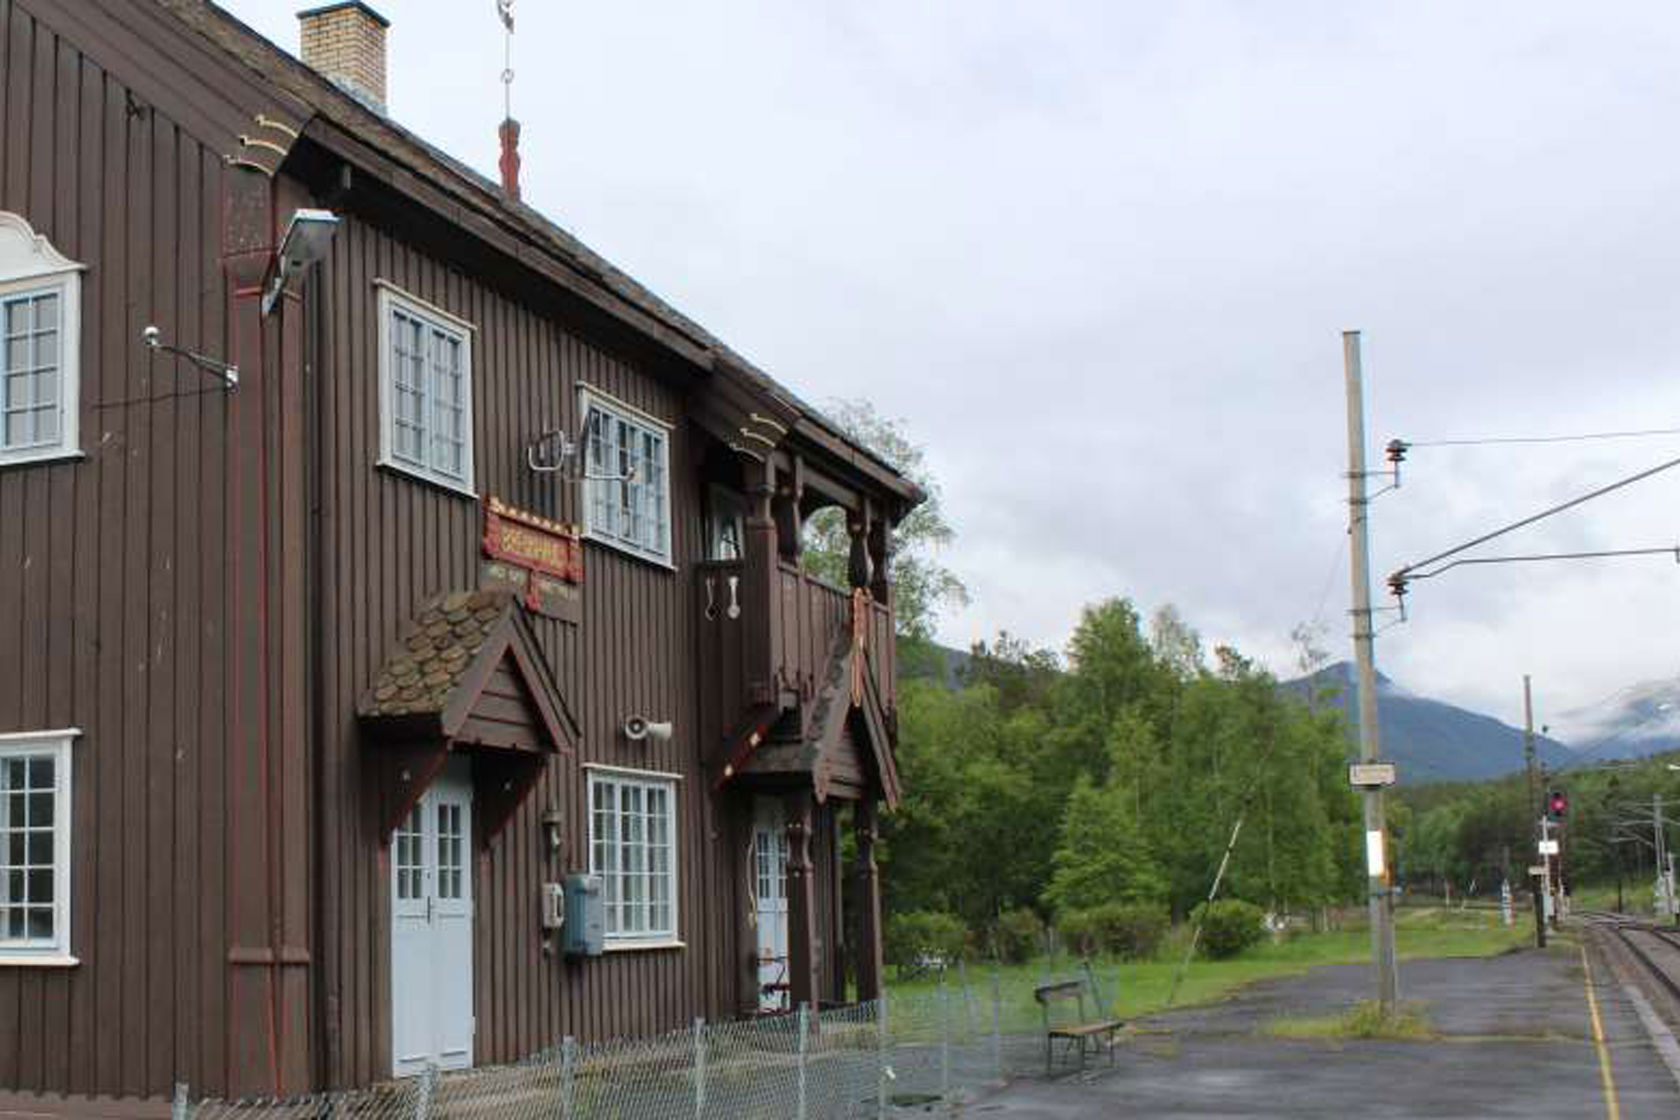 The station building at Brennhaug station